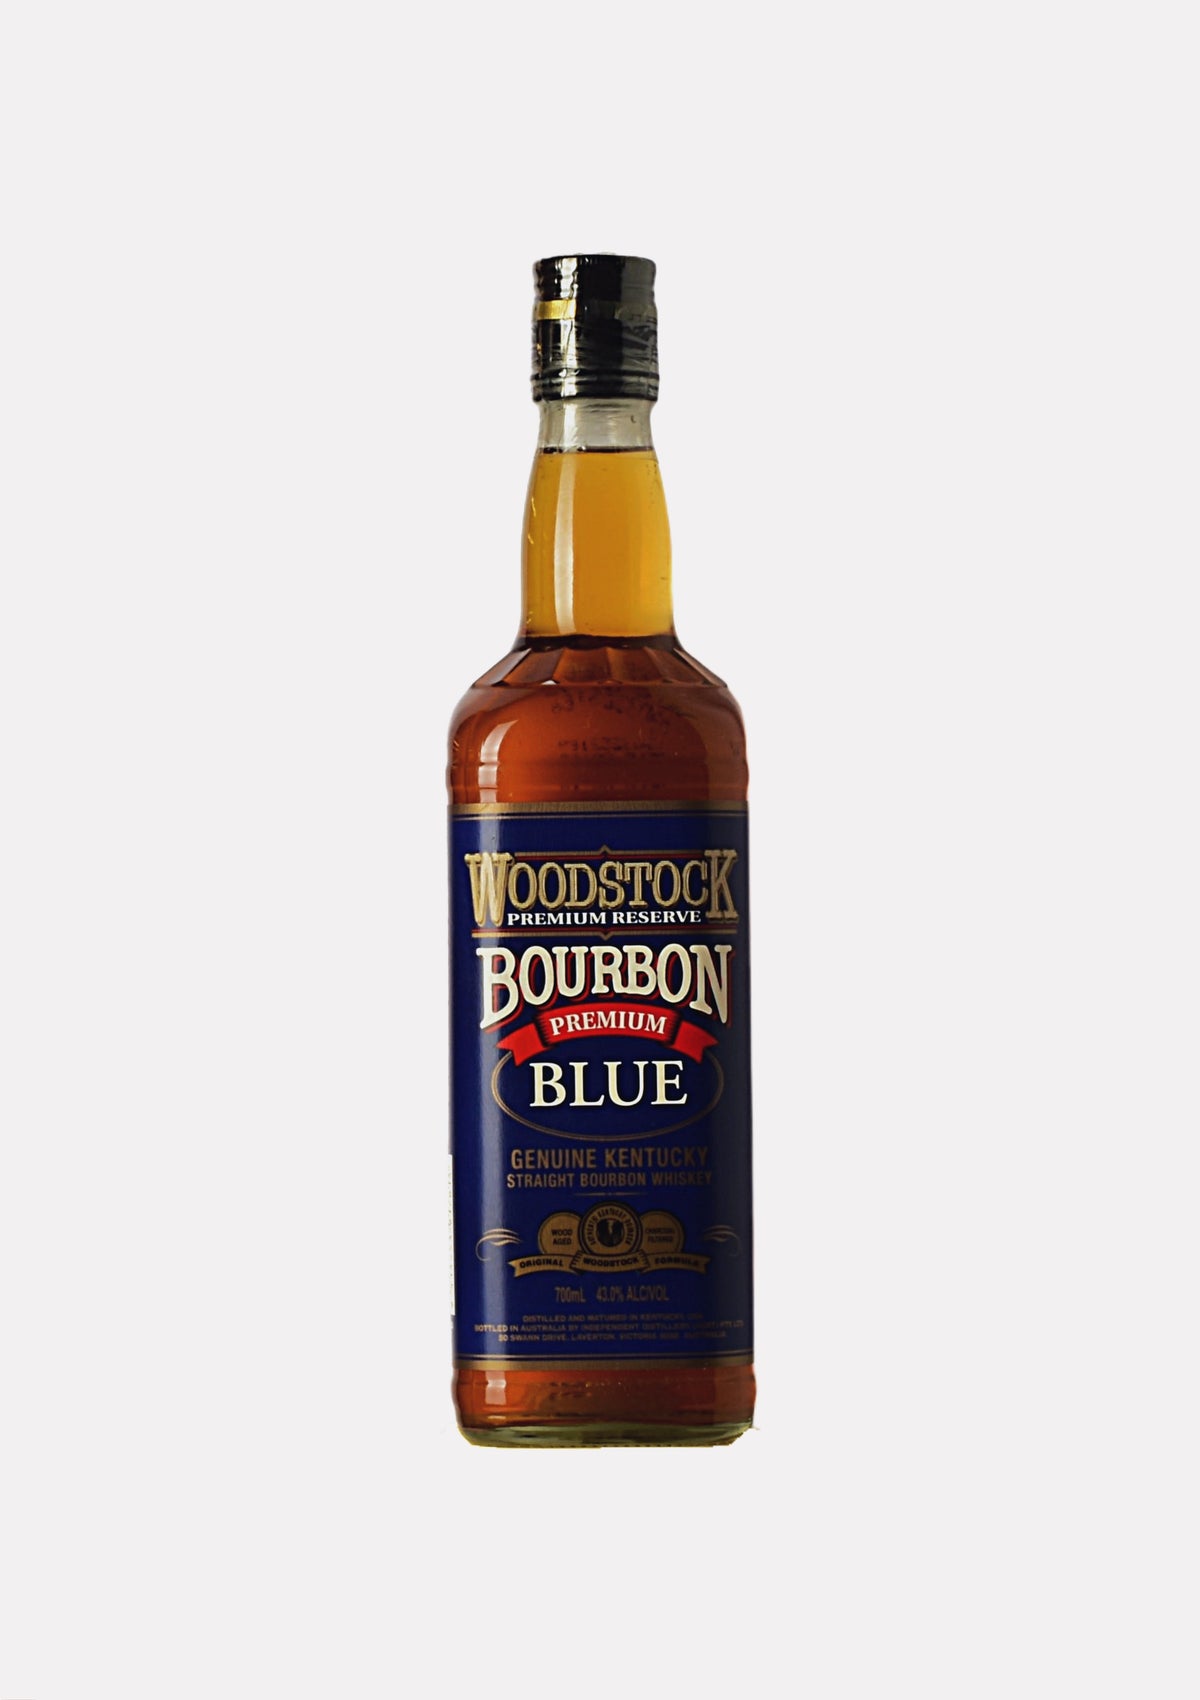 Woodstock Premium Reserve Bourbon Blue